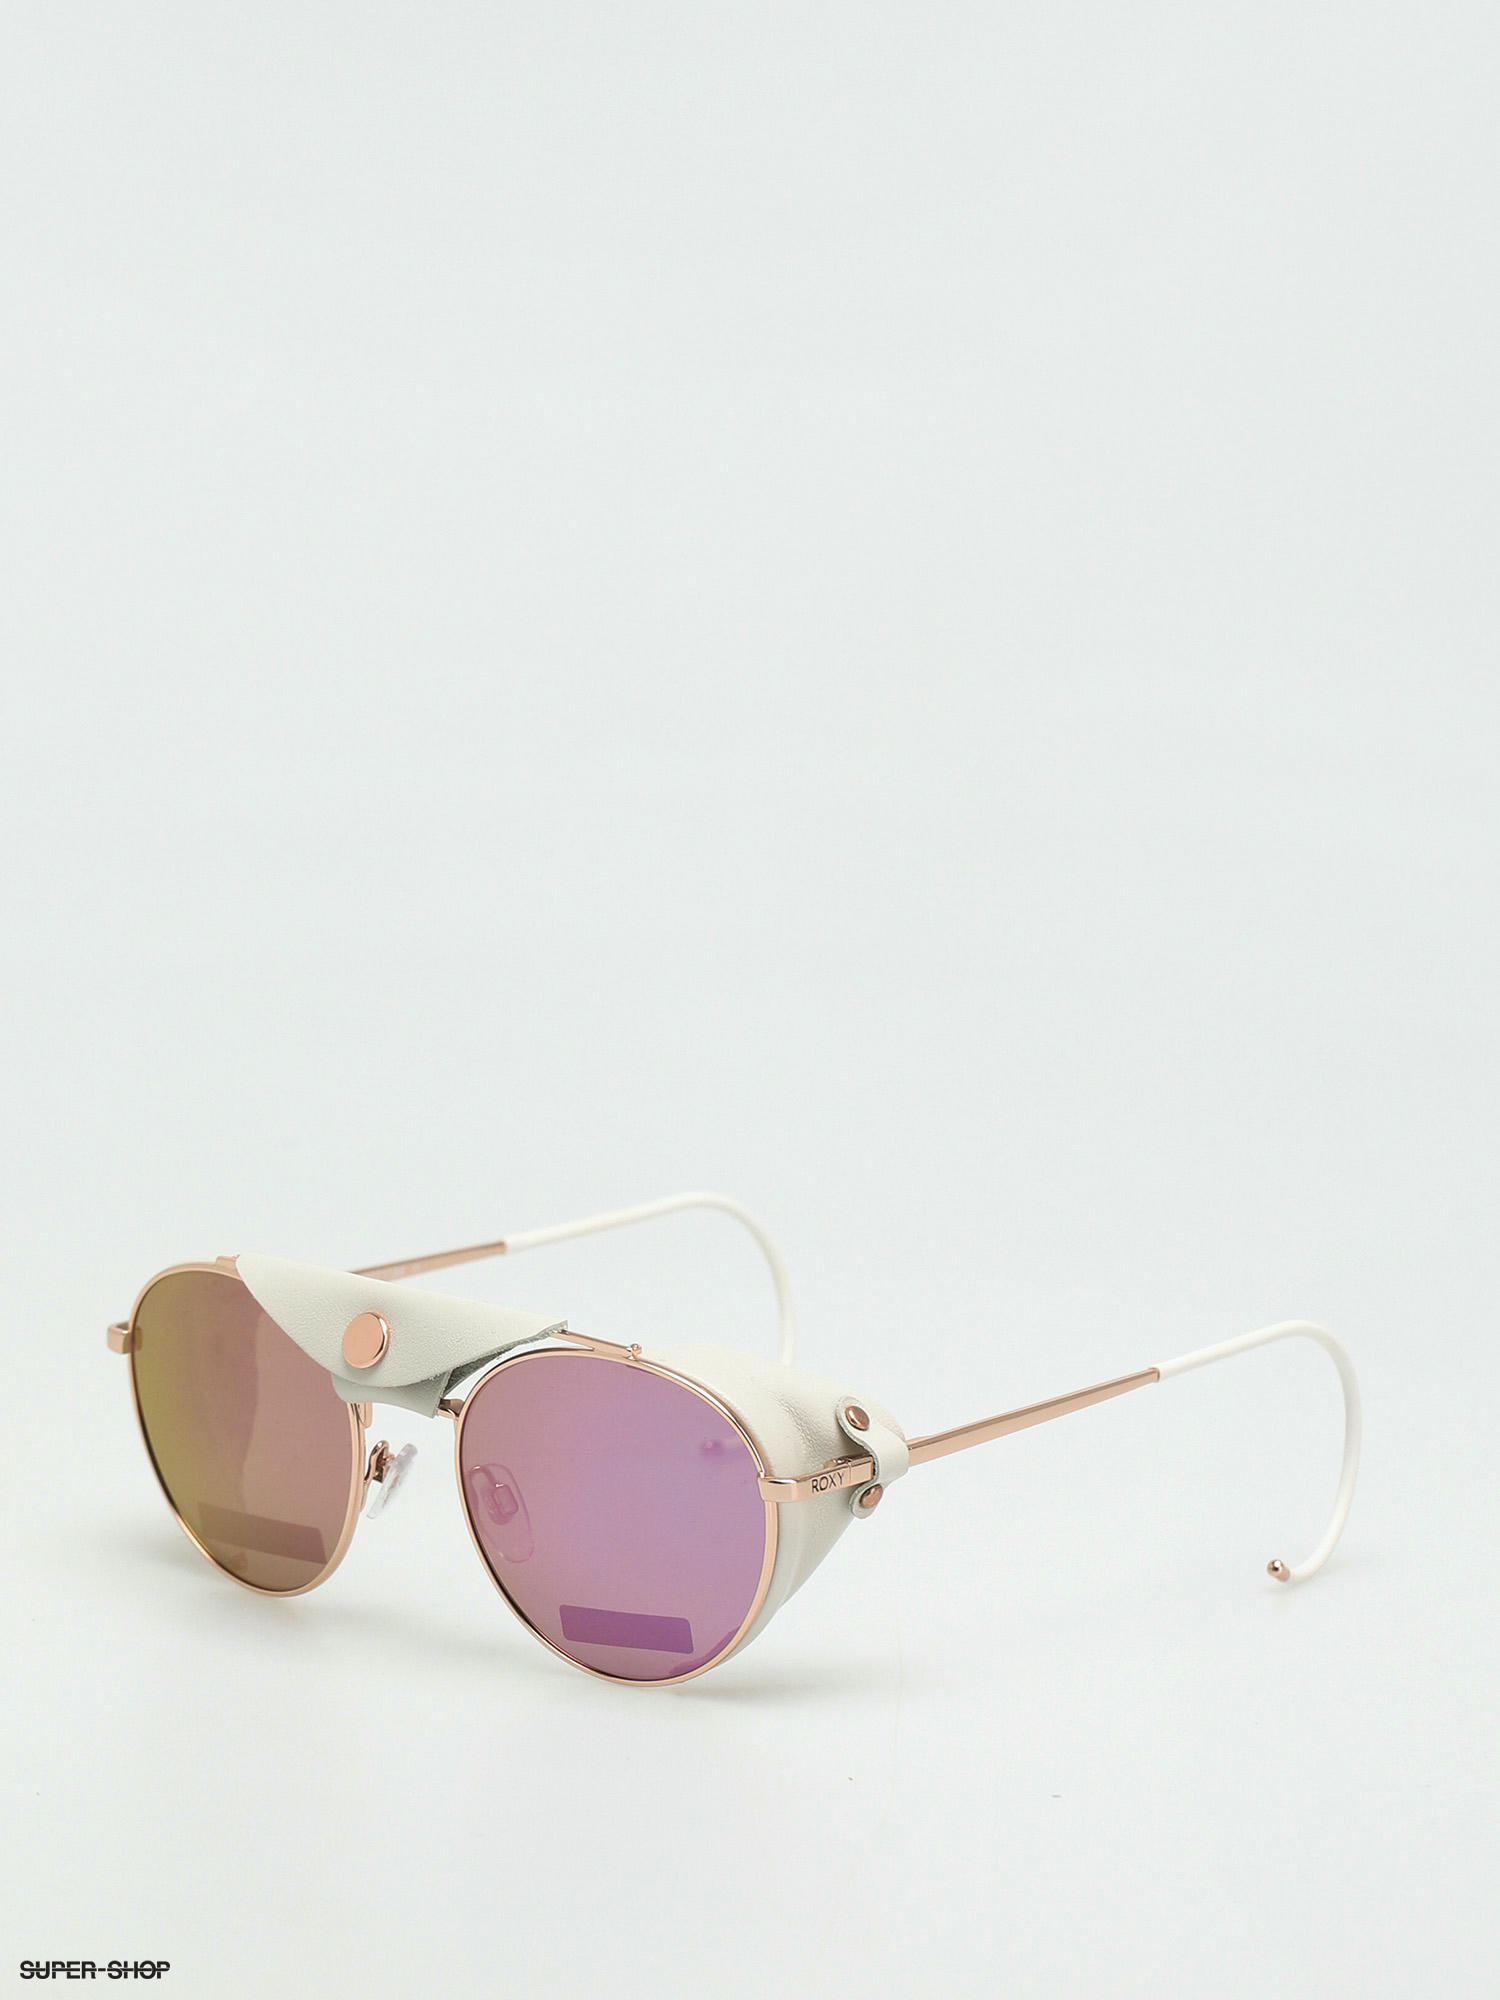 Sunglasses white) Roxy rosegold Wmn Blizzard (shiny